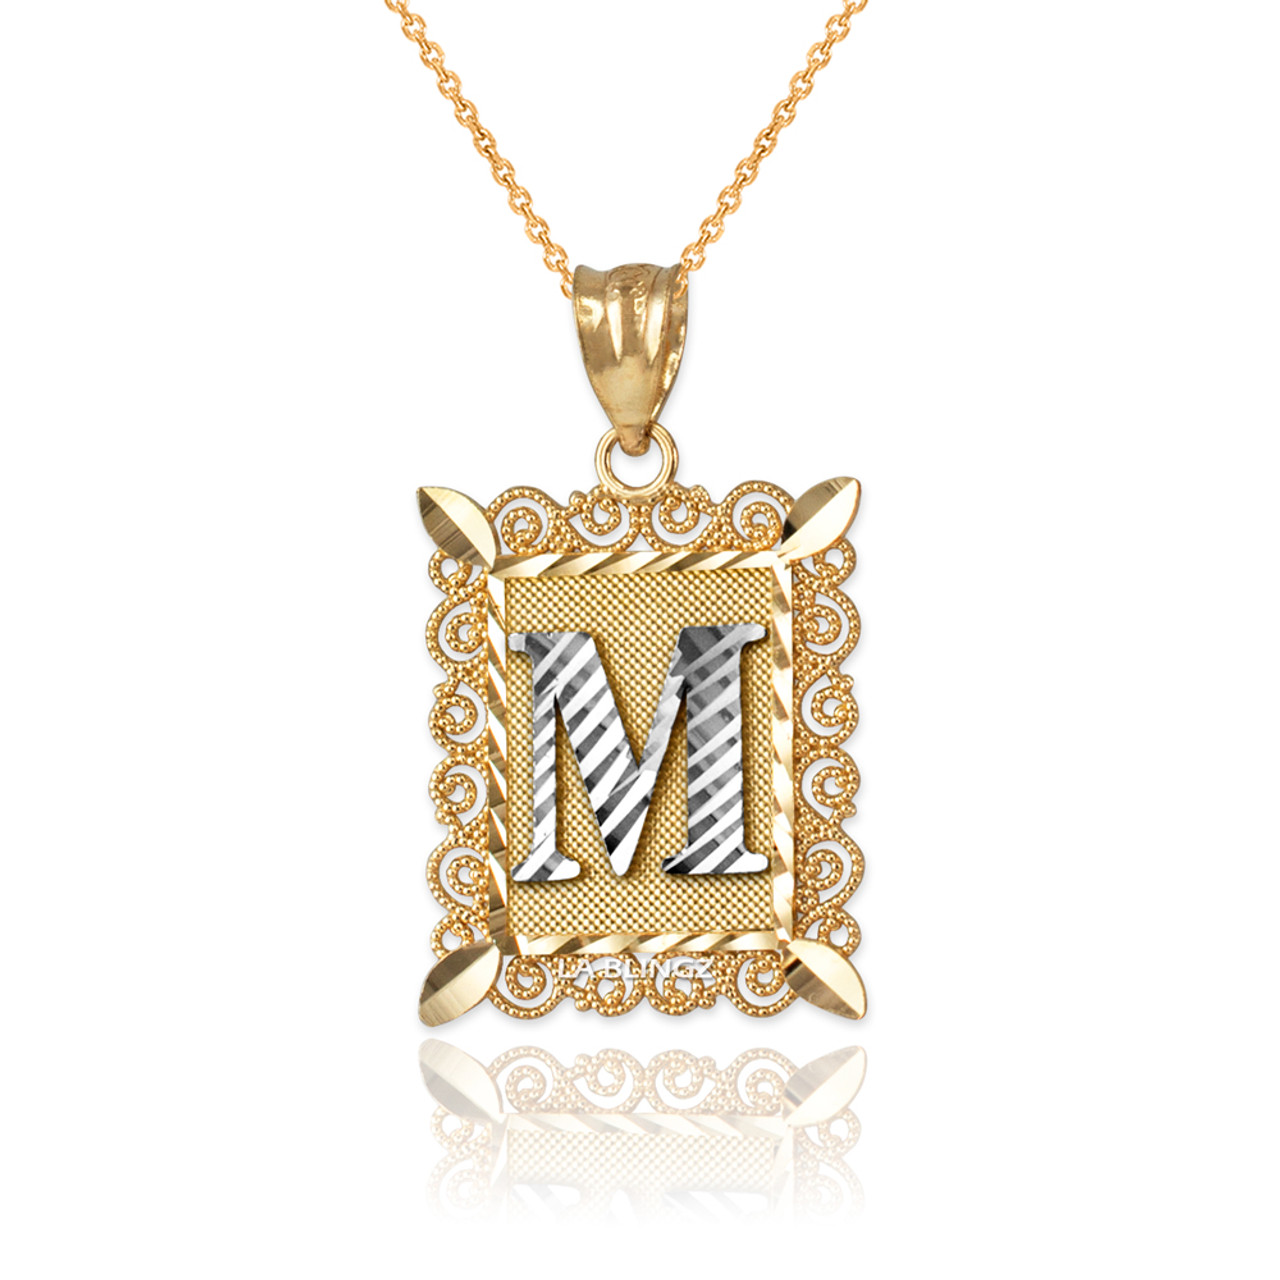 M Alphabet Gold Pendant